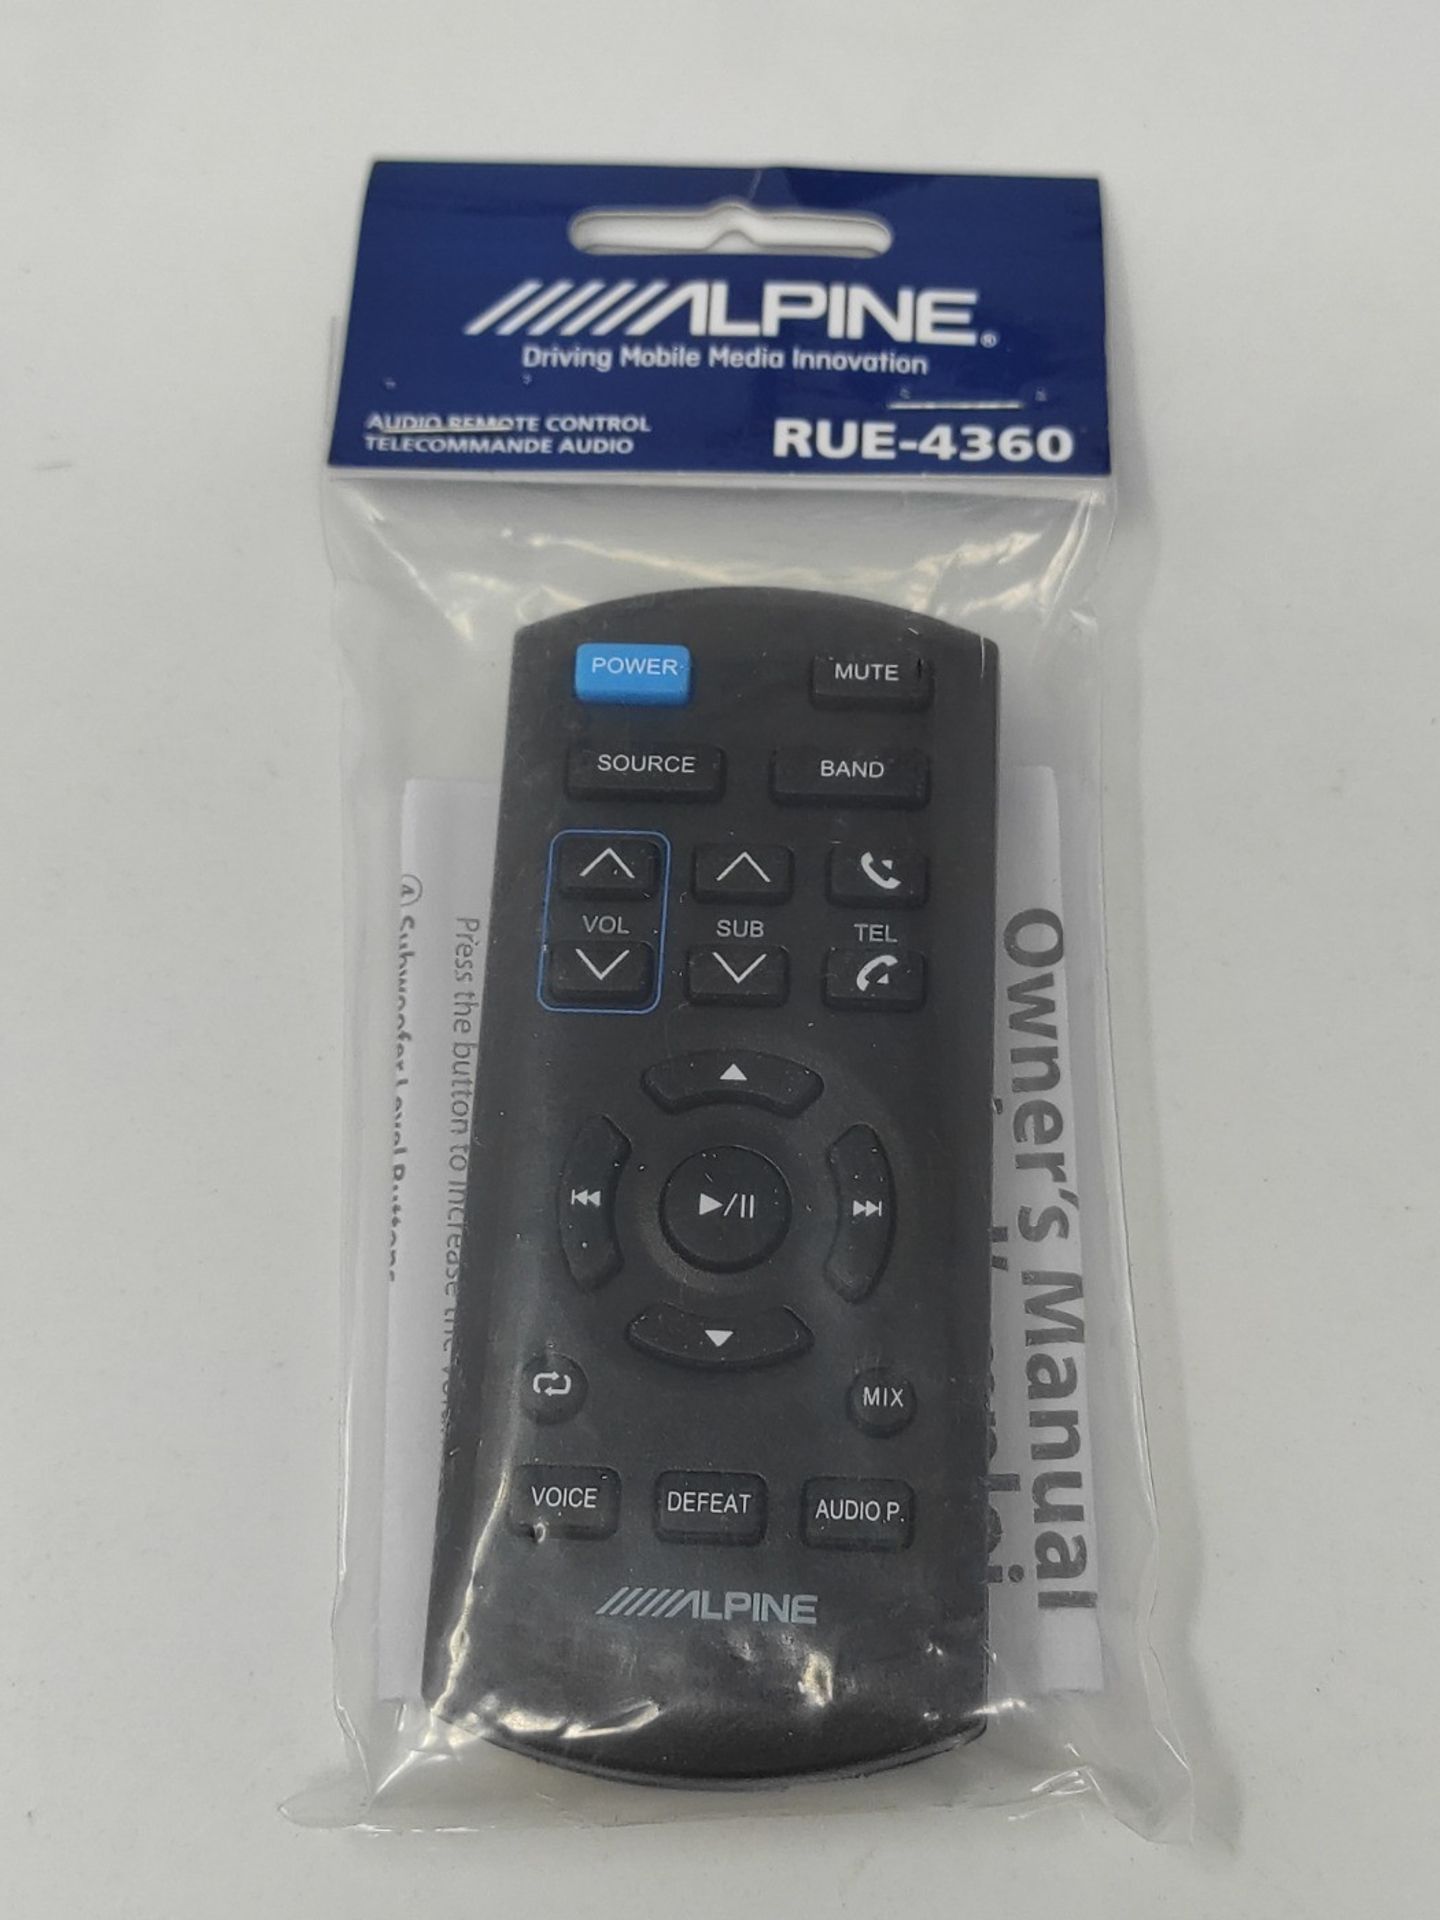 Alpine RUE-4360 Remote Control for Head Units, black - Image 2 of 2